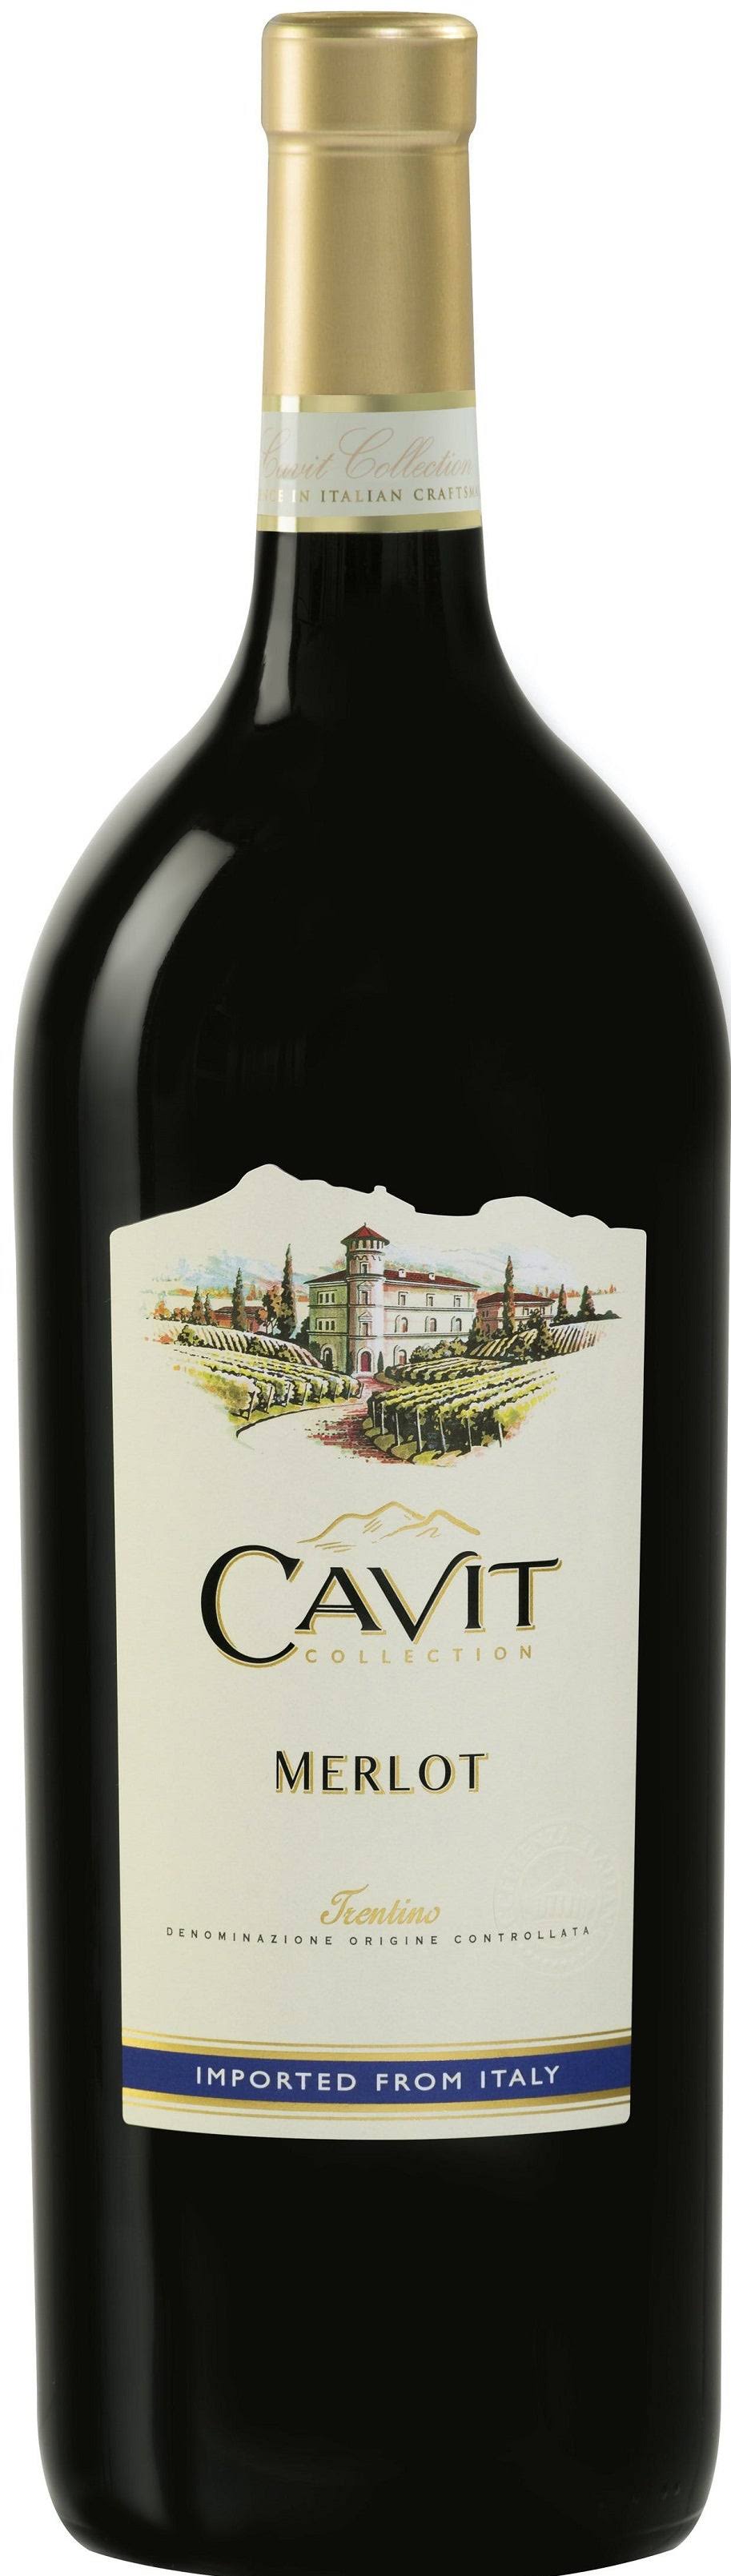 Cavit Collection Merlot Trentino - 750ml